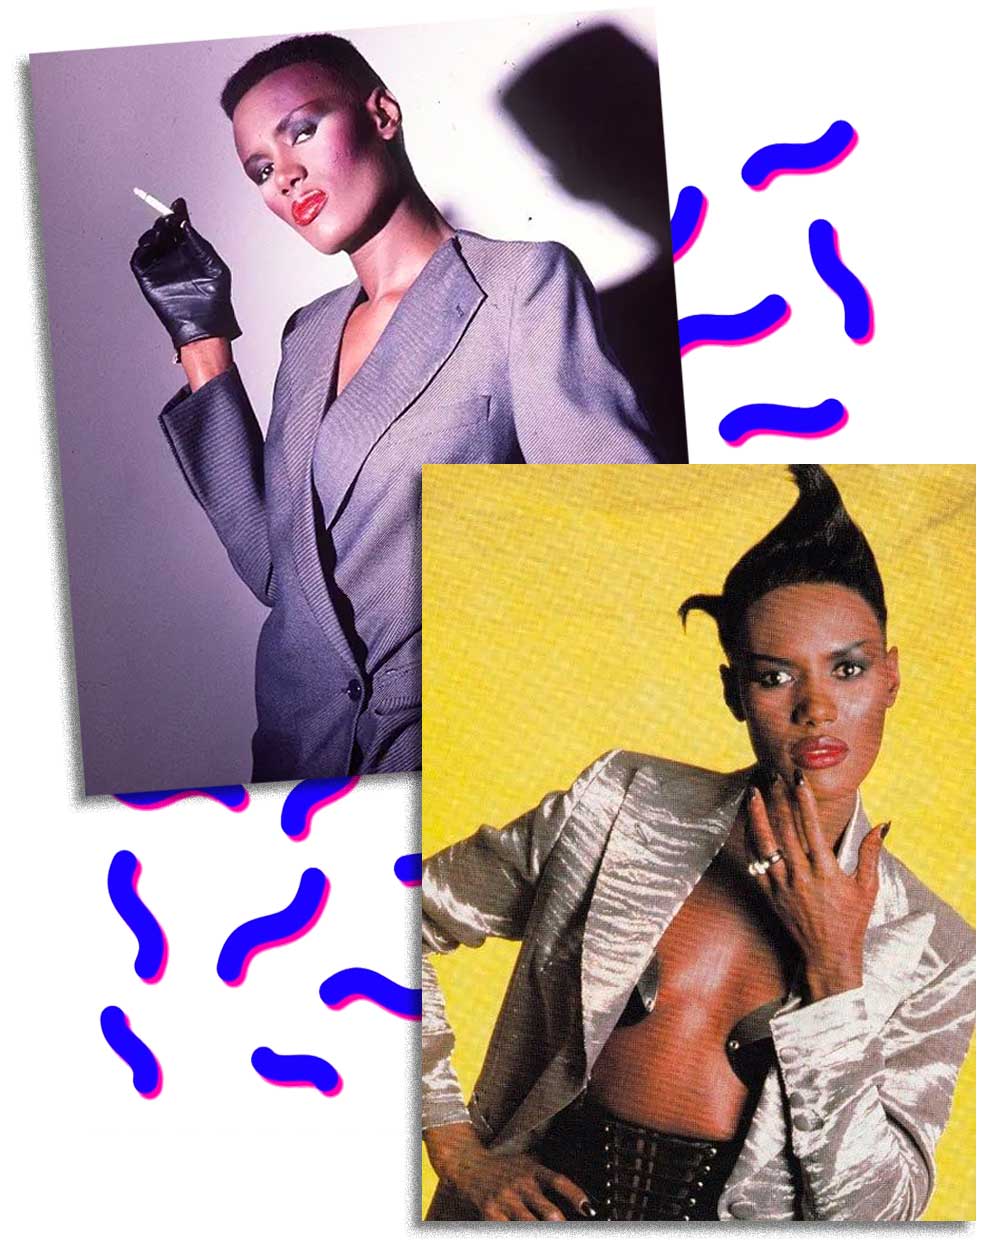 Grace Jones Influenced the 80s Fashion